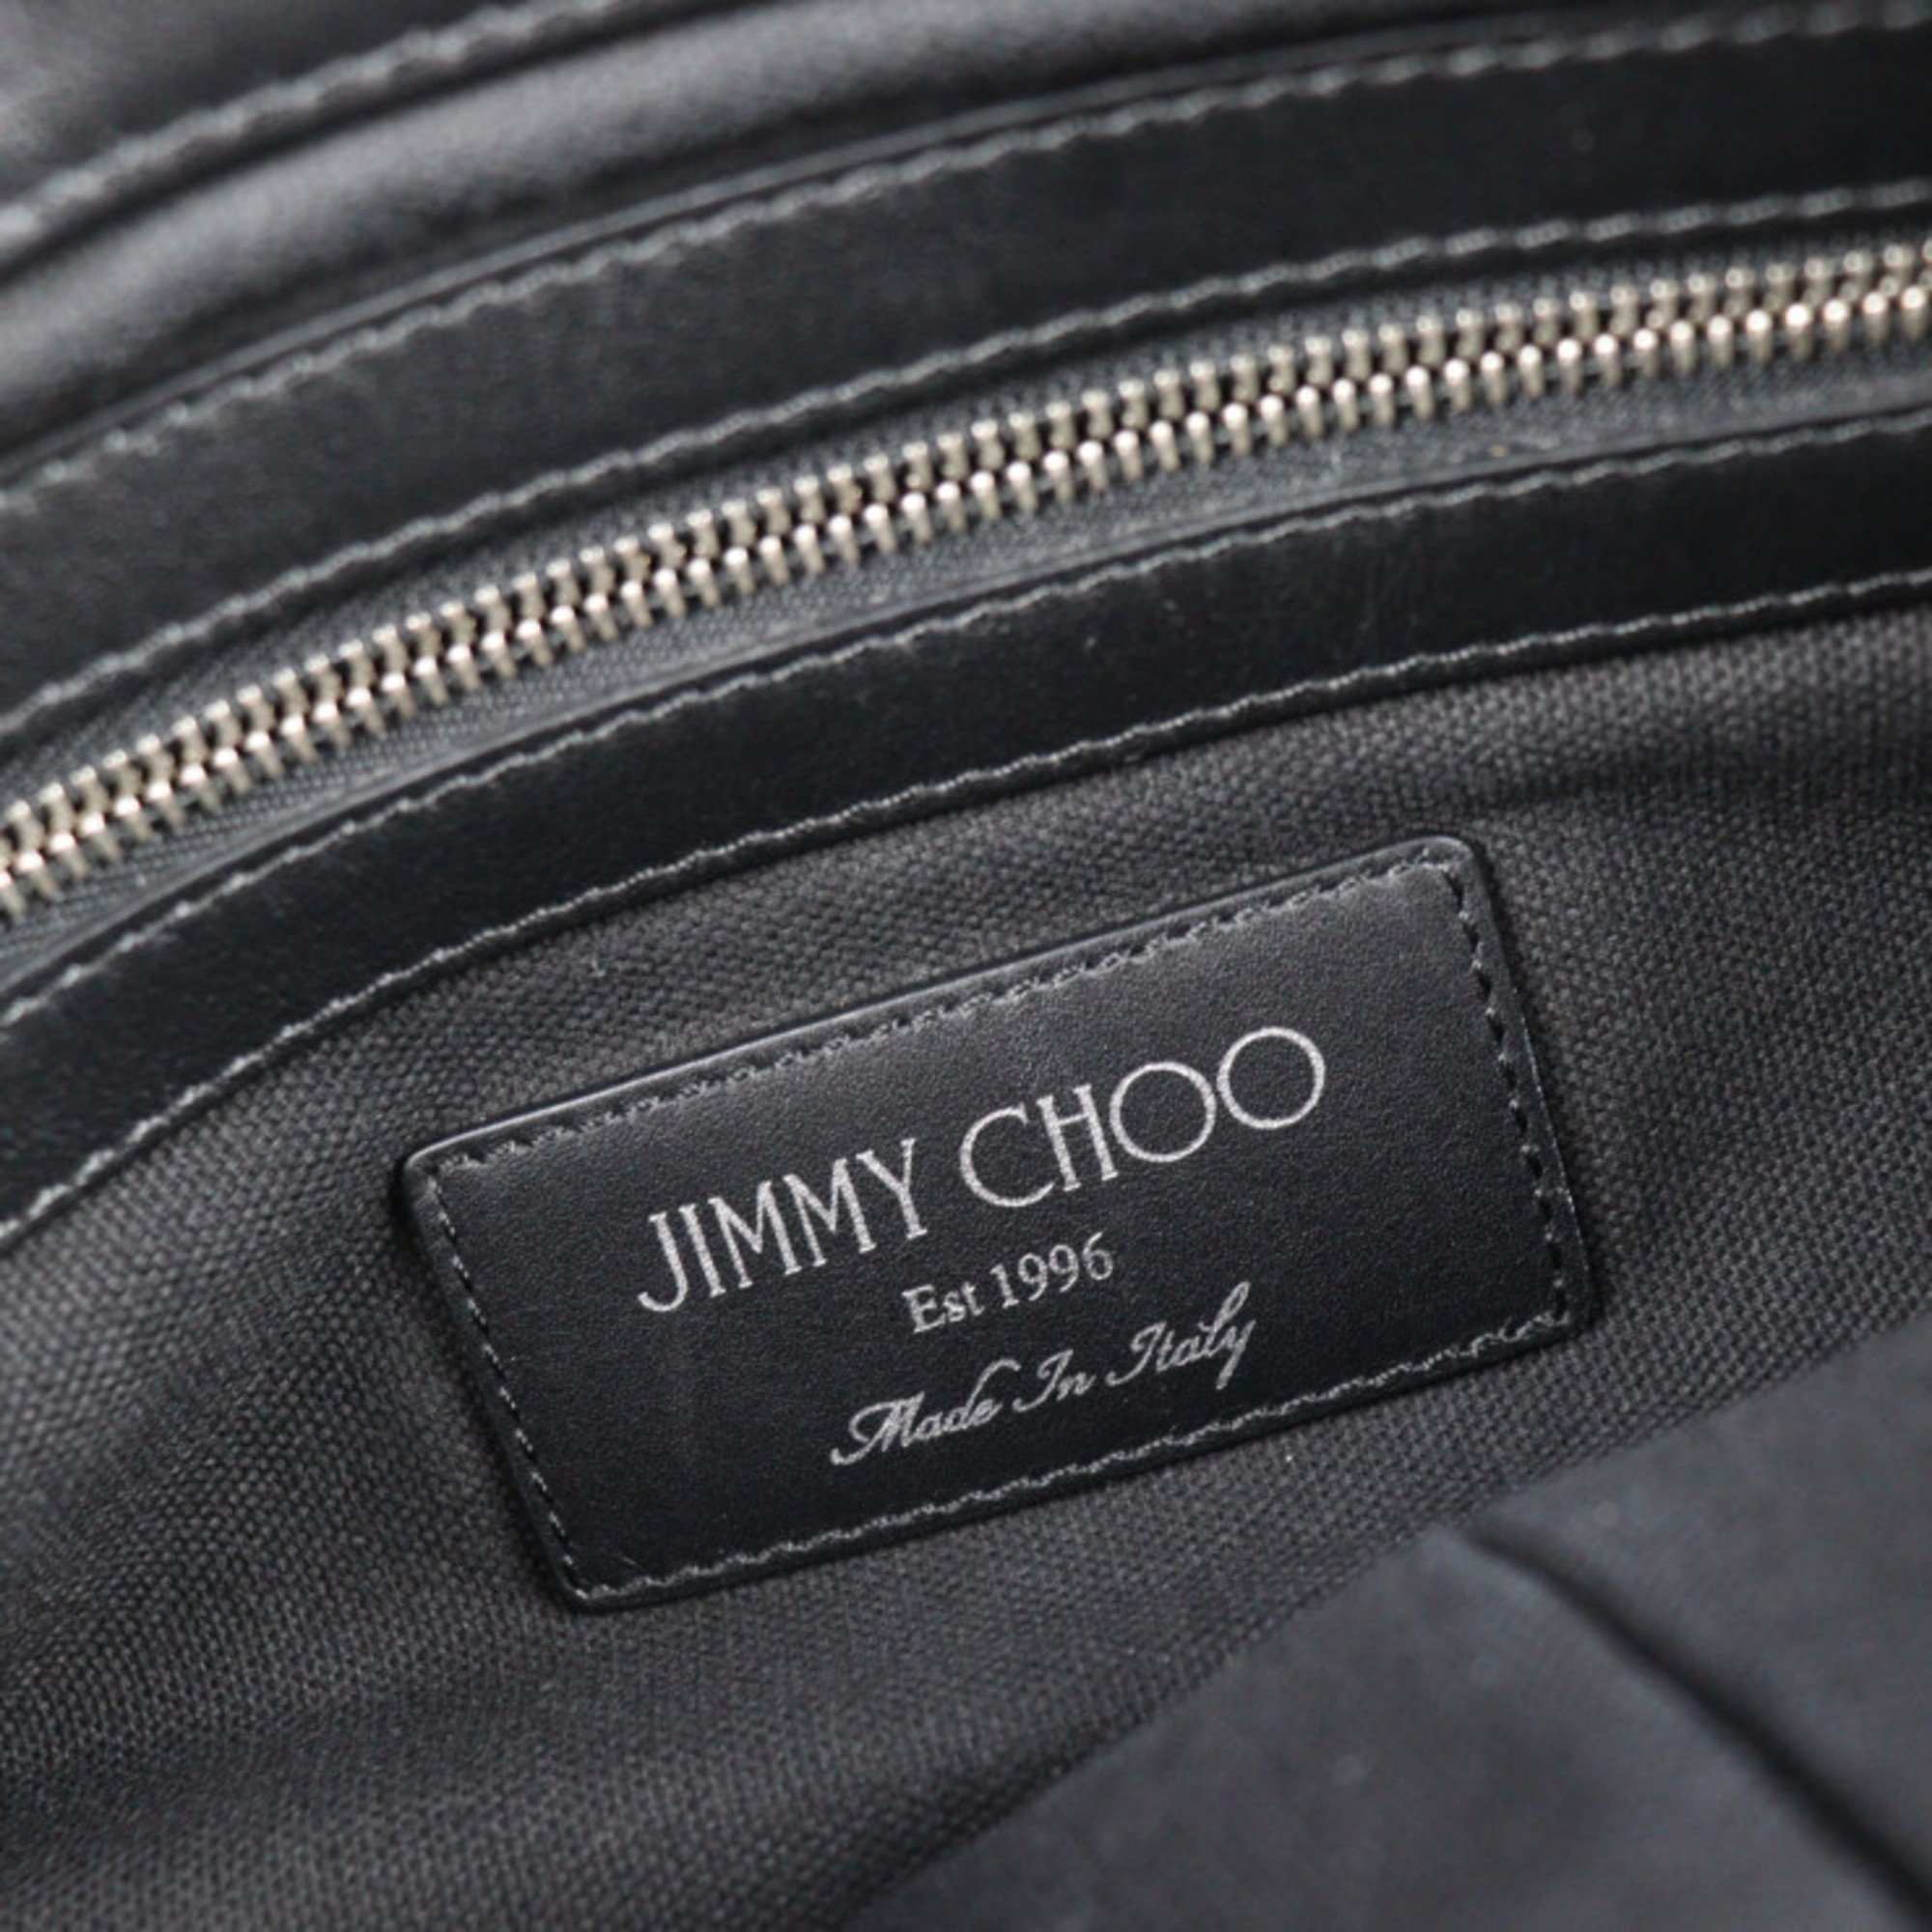 JIMMY CHOO Jimmy Choo Derek DEREK second bag EMG leather black star studs emboss